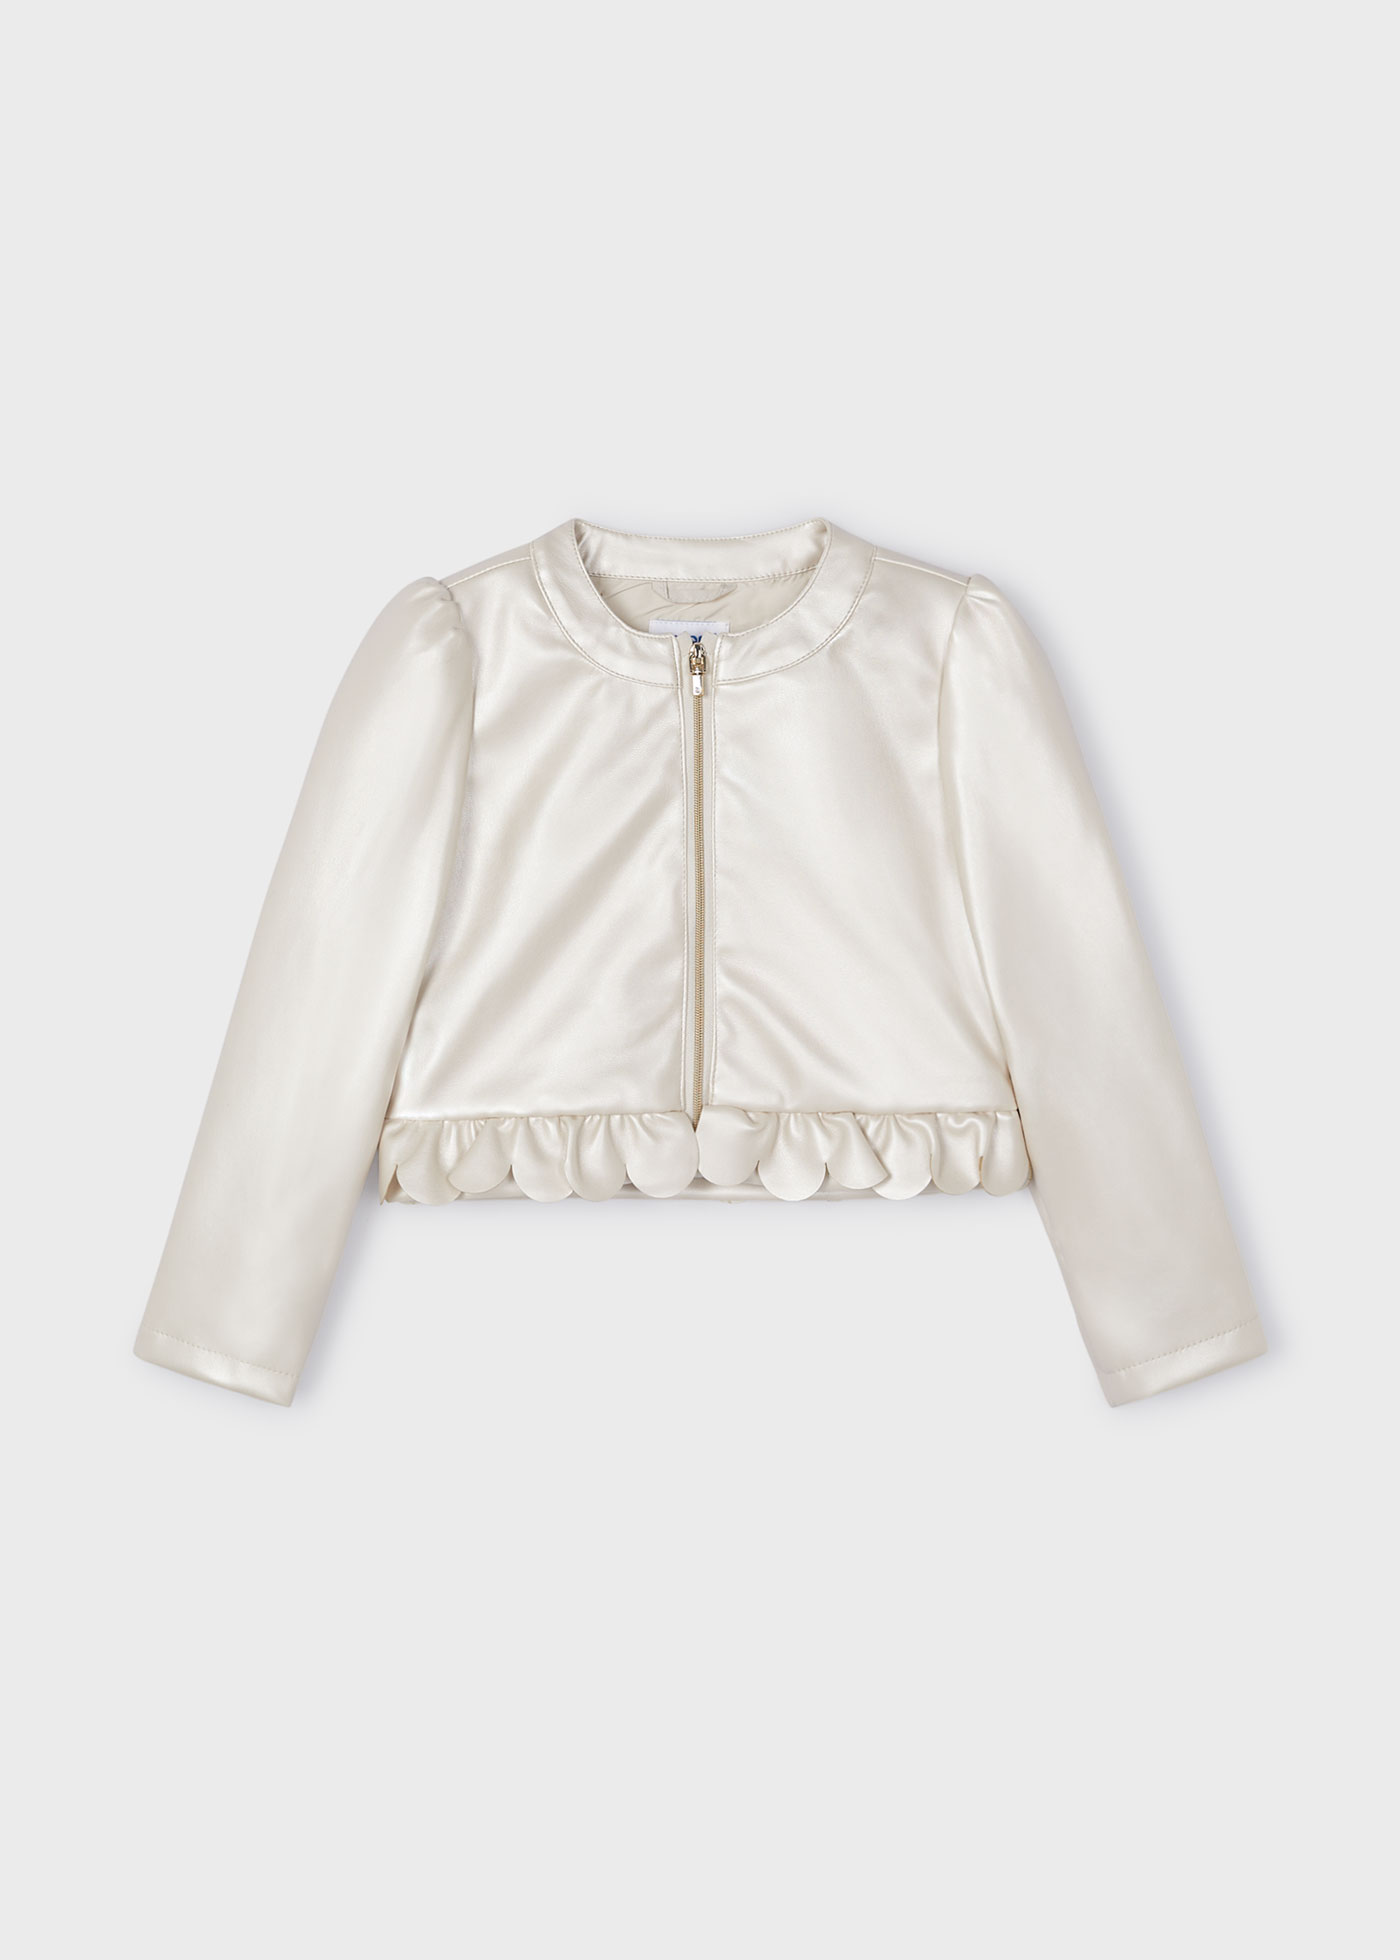 Buy Girls Black Solid Collar Full Sleeve Girls Jacket Online in India -  Monte Carlo